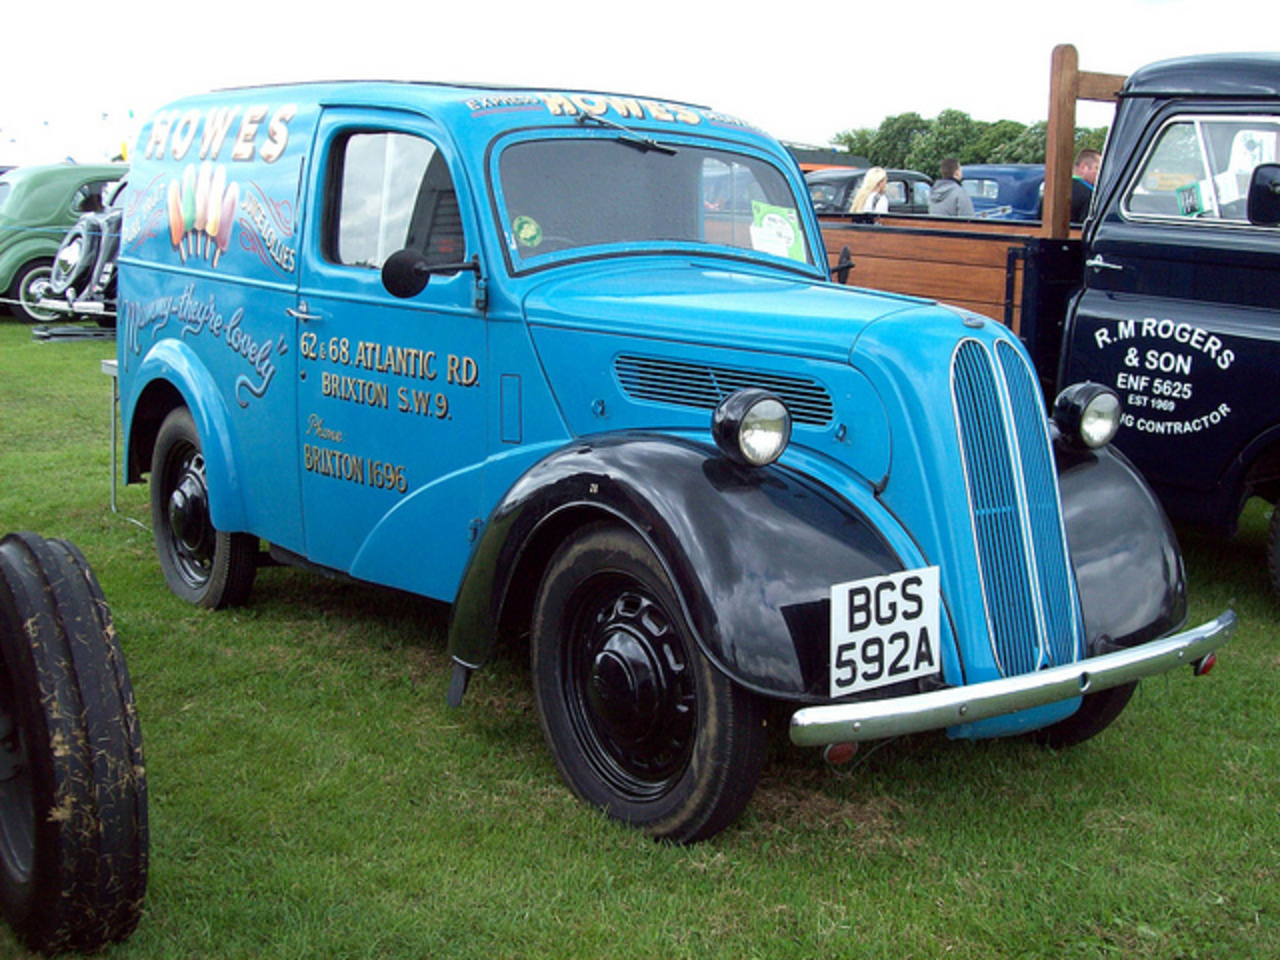 128 Fordson Thames 8 Van (1950) | Flickr - Photo Sharing!